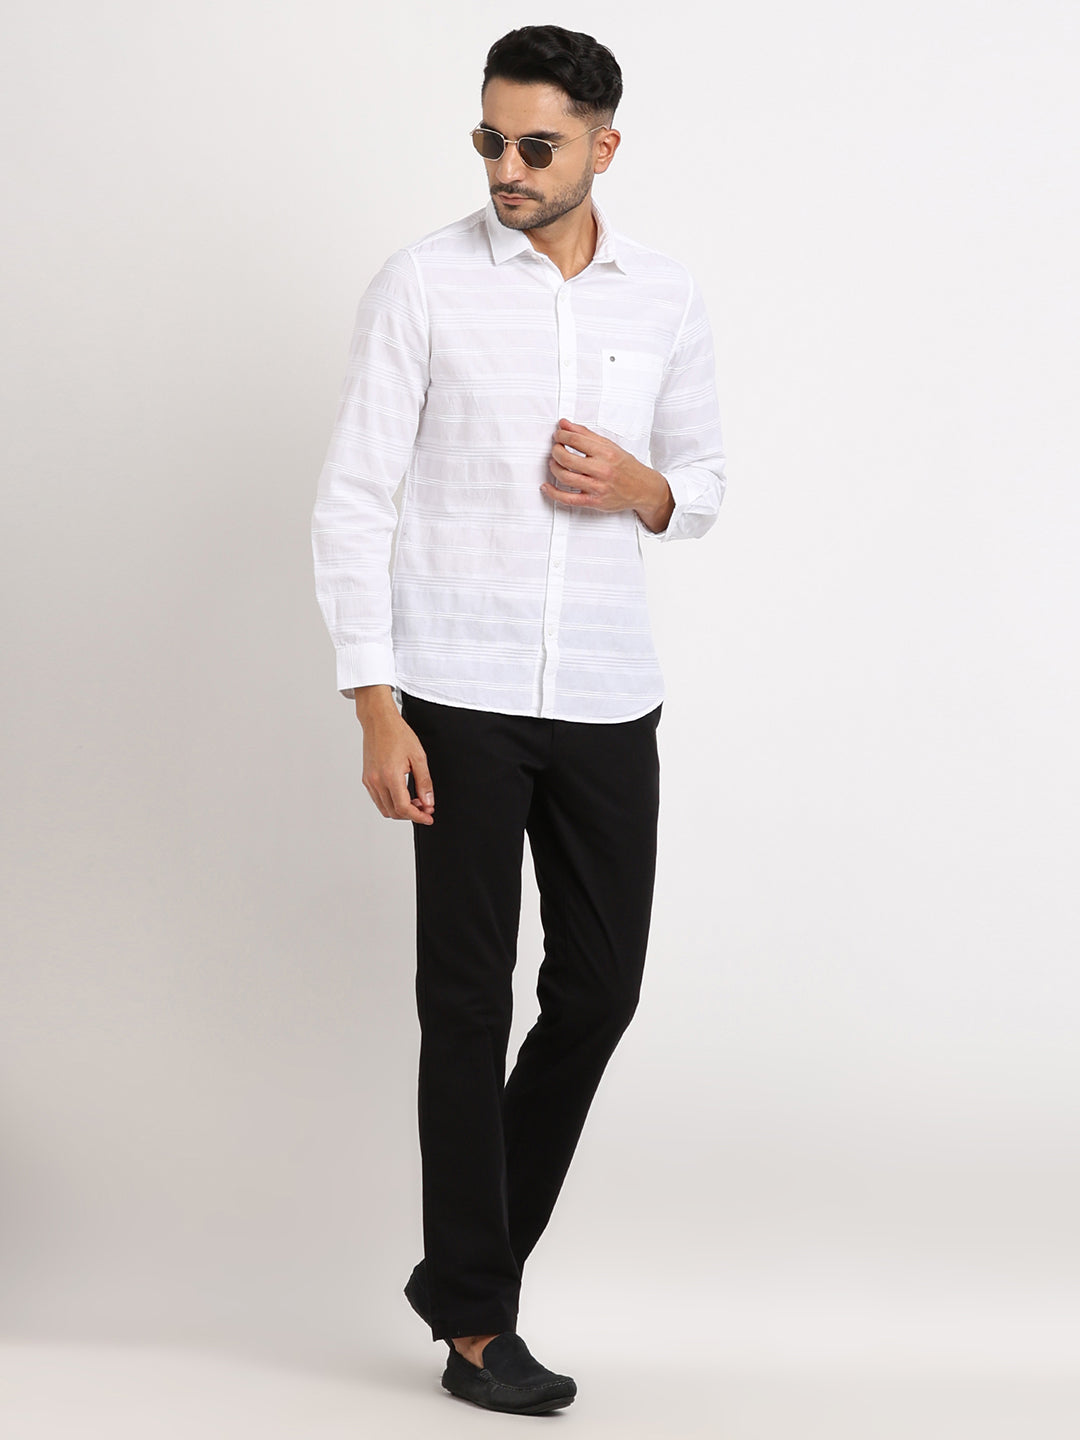 Cotton Stretch Black Plain Ultra Slim Fit Flat Front Casual Trouser